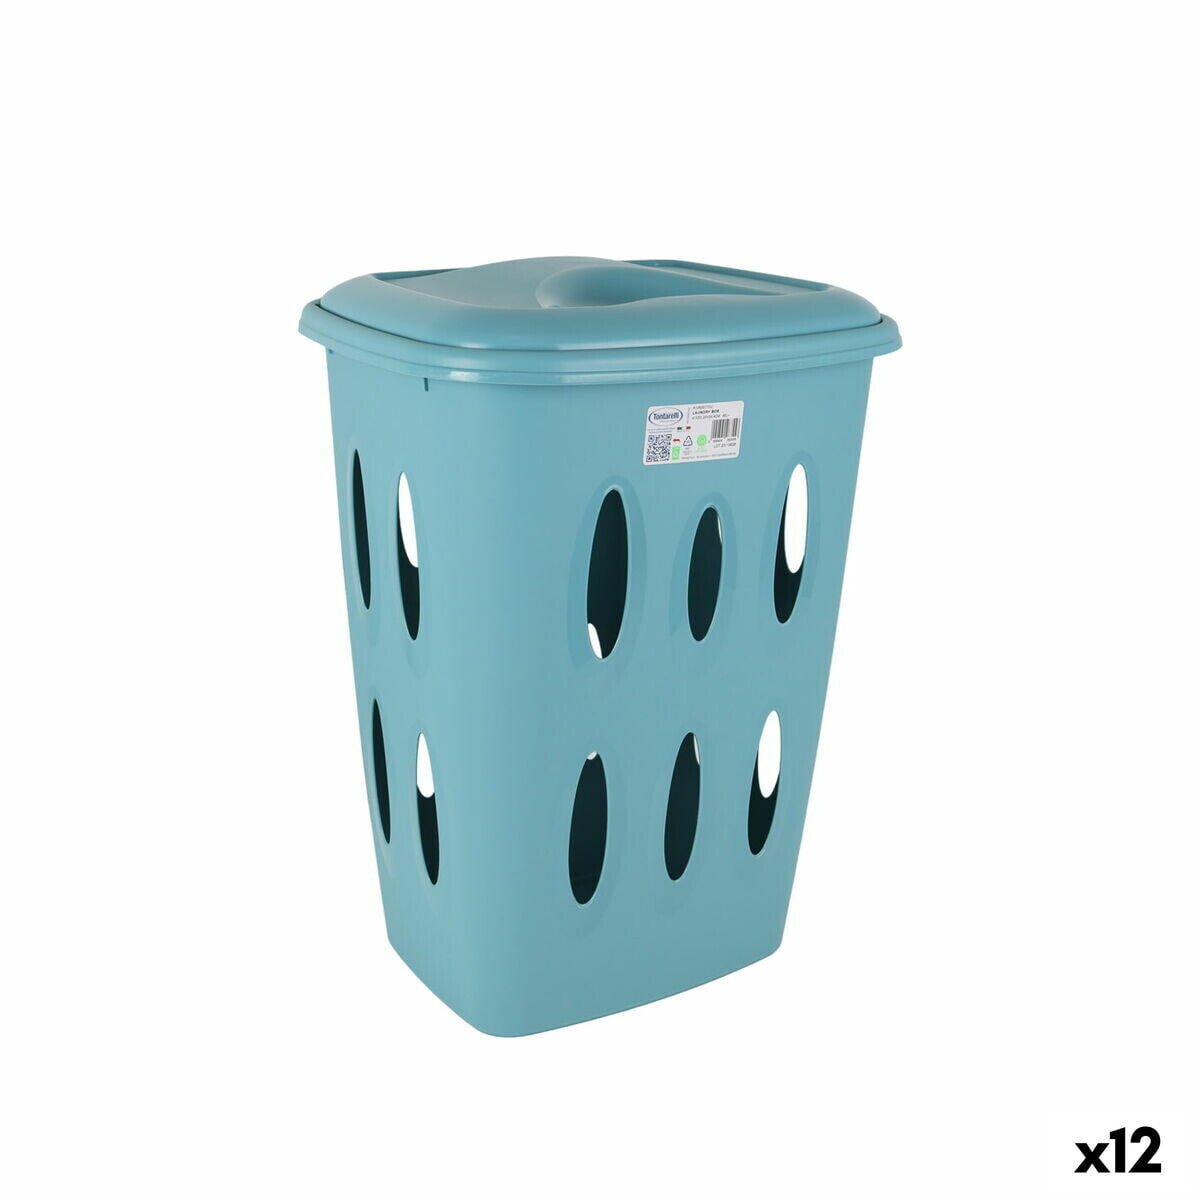 Laundry basket Tontarelli Laundry Blue 41 x 33,2 x 54,5 cm (12 Units)